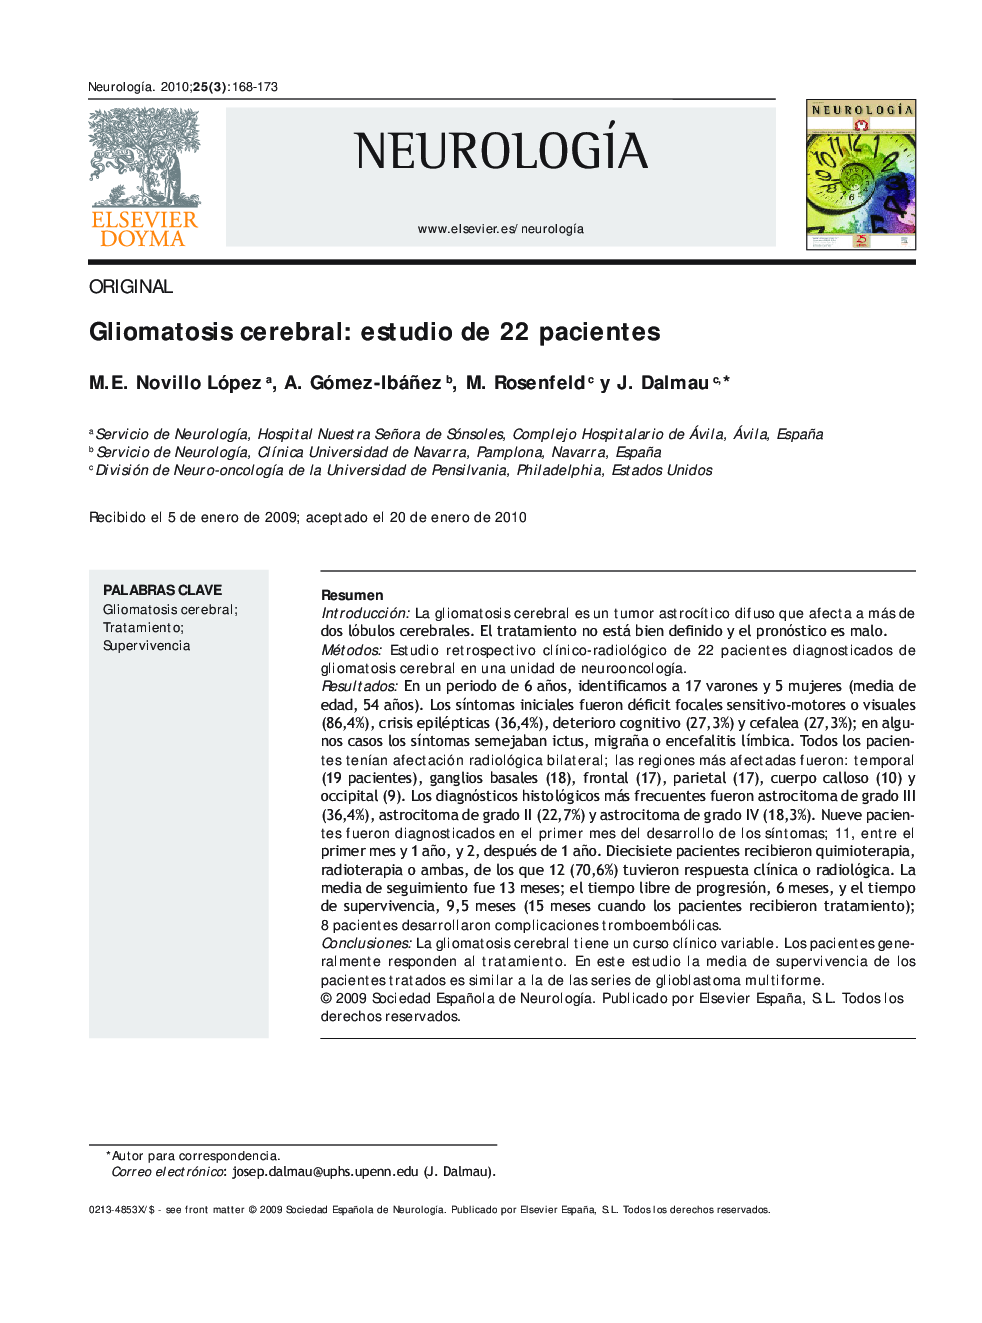 Gliomatosis cerebral: estudio de 22 pacientes